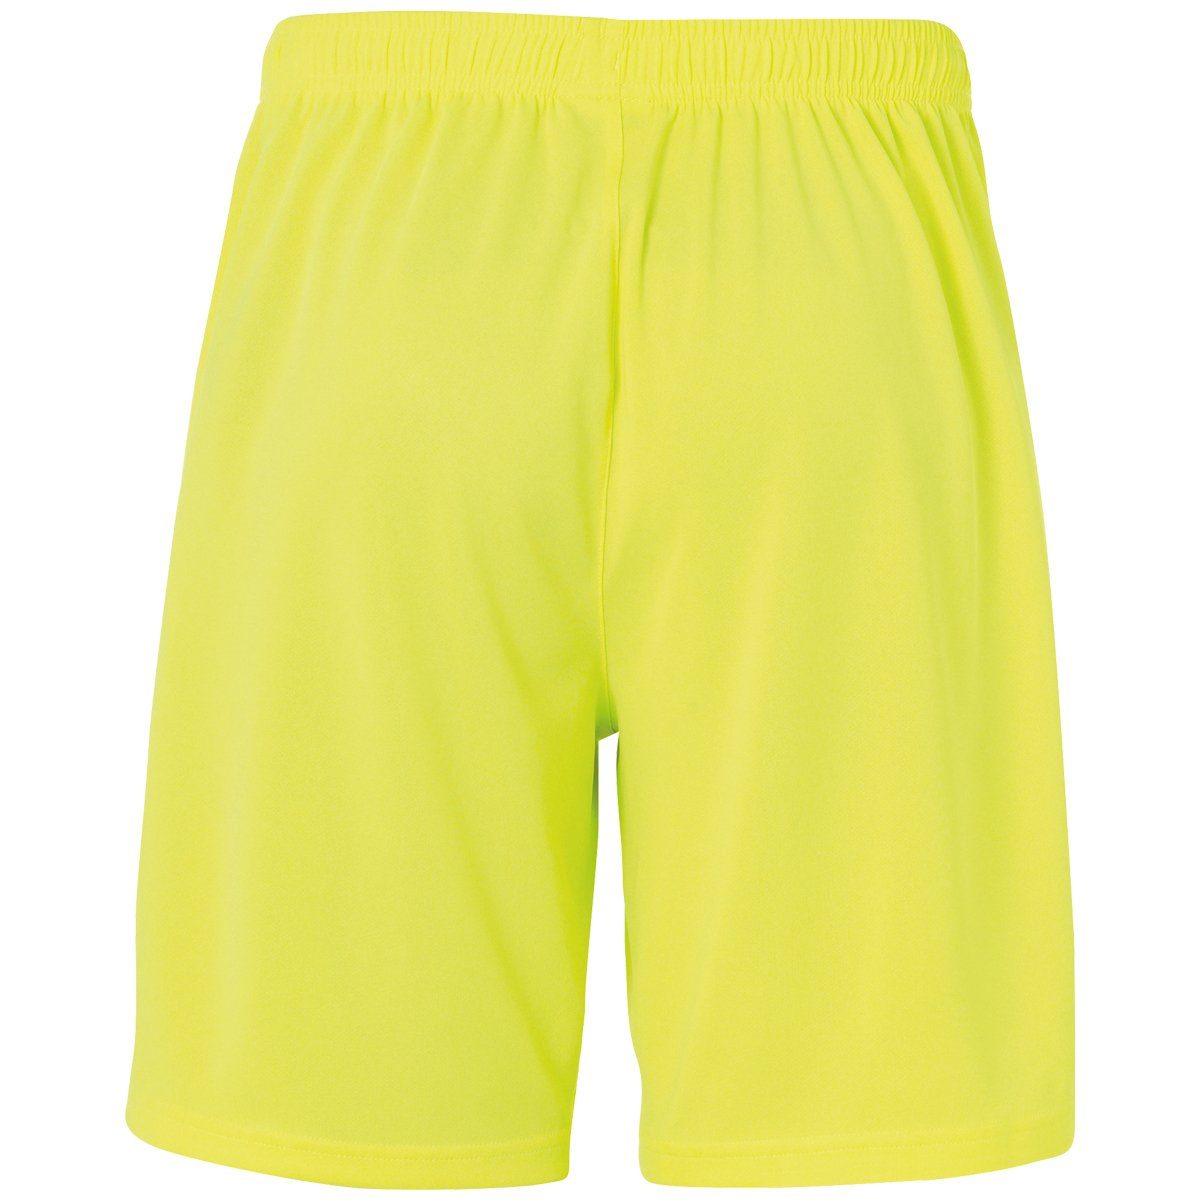 fluo blau uhlsport uhlsport Shorts Shorts gelb/radar